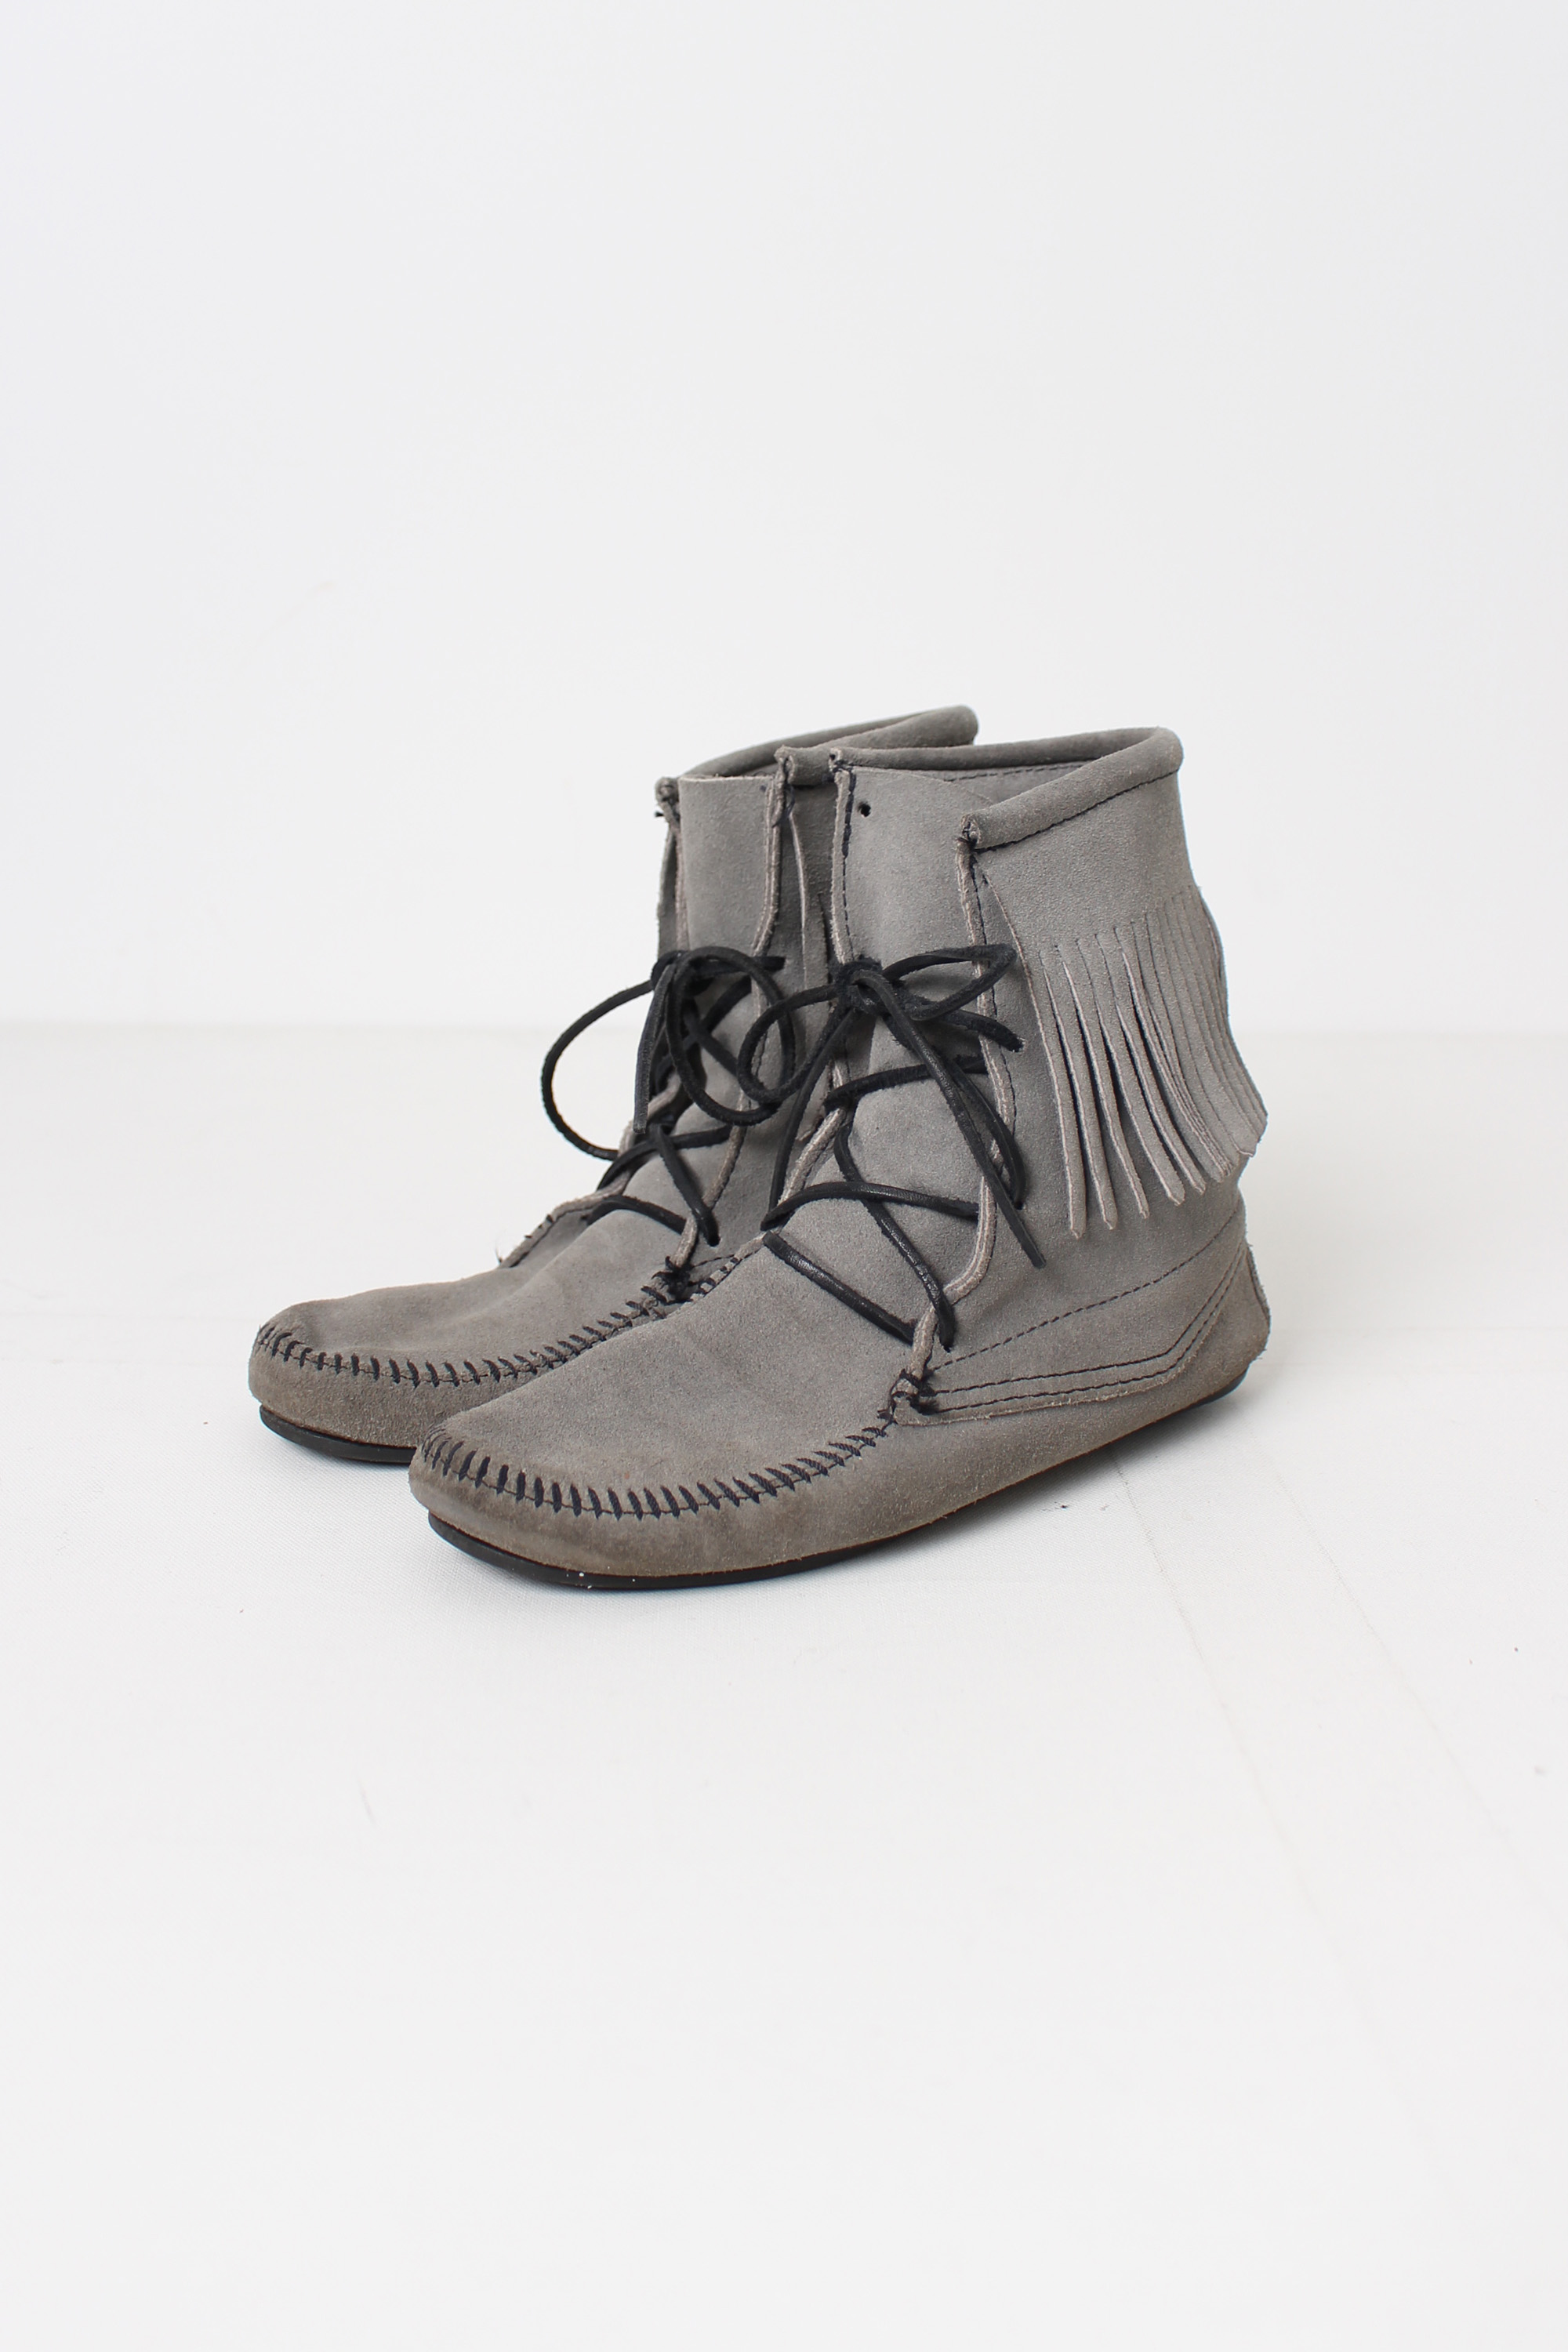 minnetonkal boots